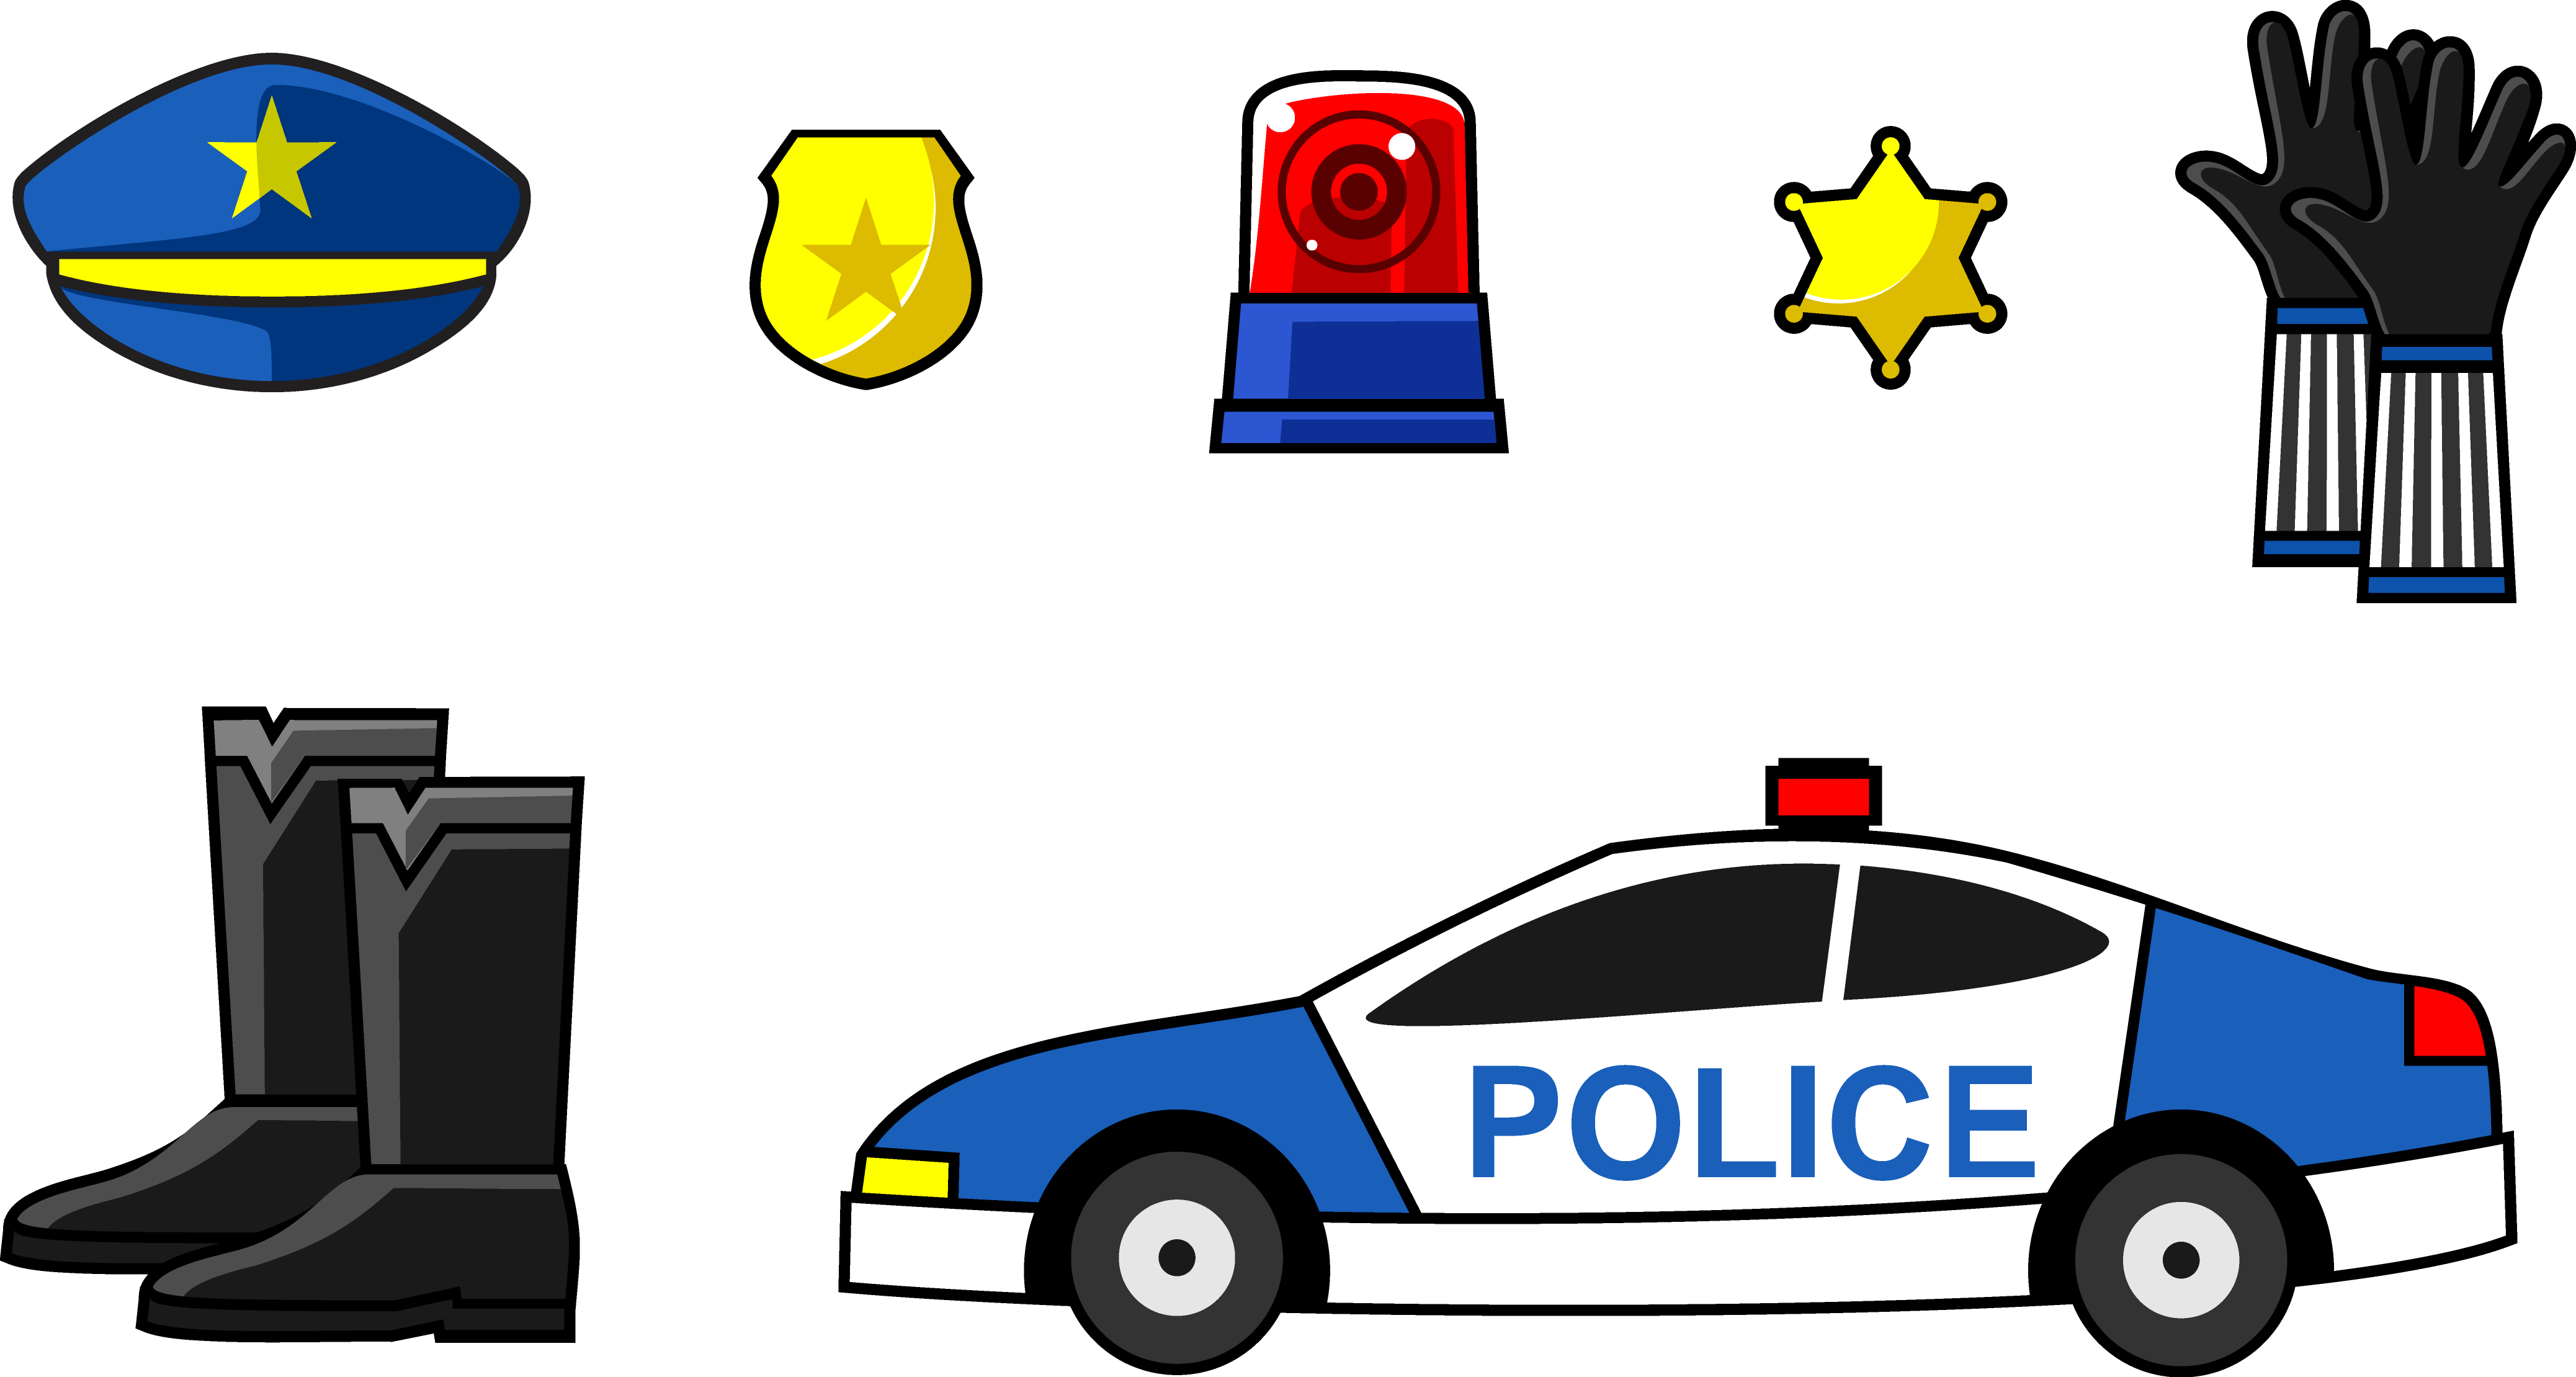 Police Officer Car Badge - Police Officer (4152x2219)